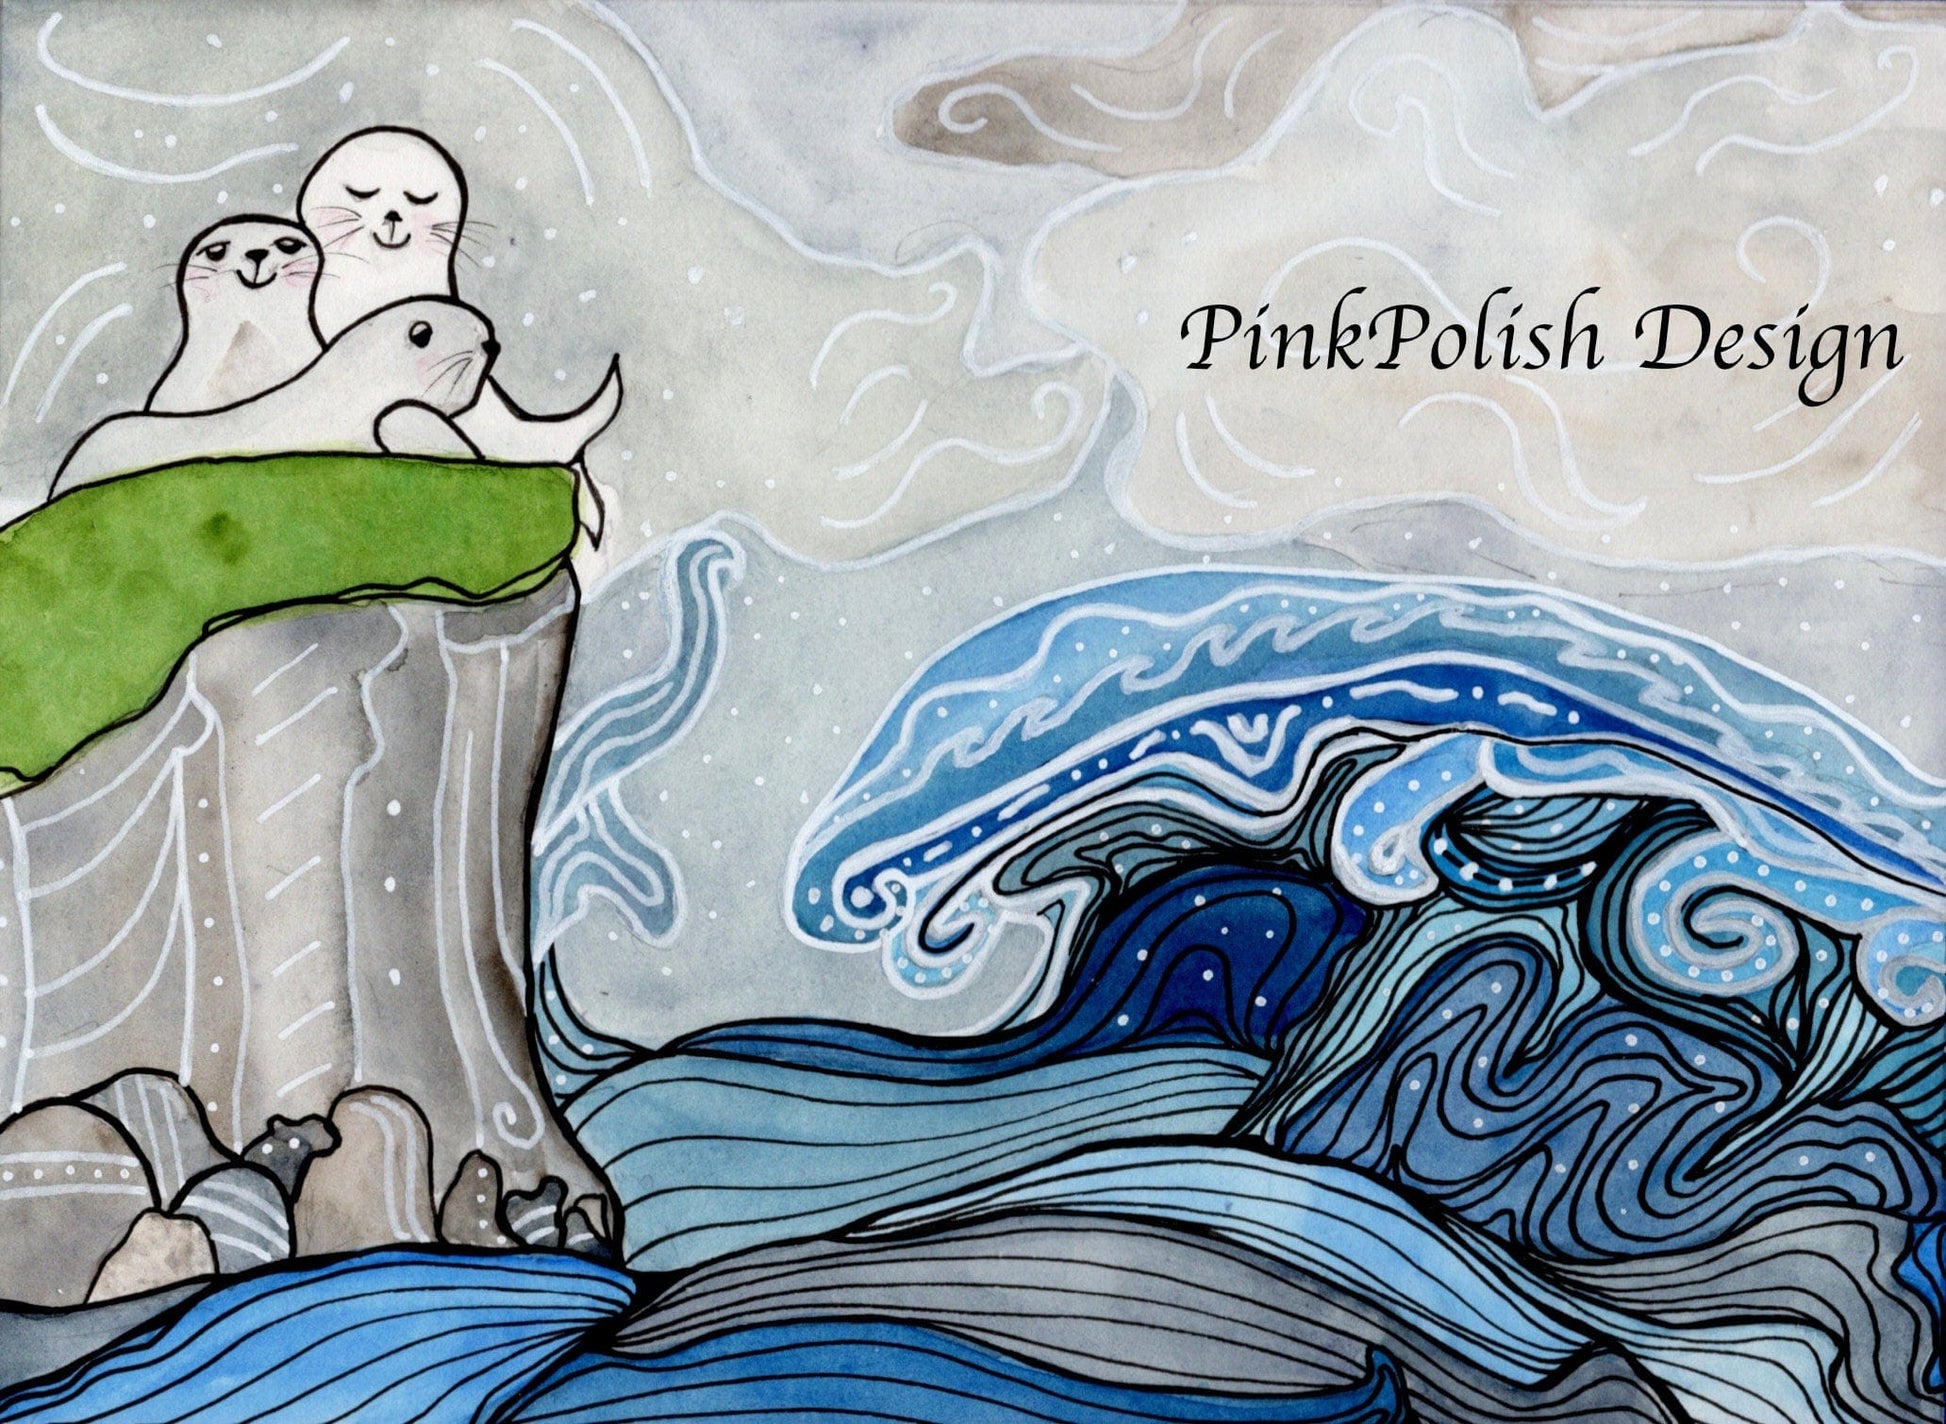 PinkPolish Design Art Prints "Song of the Sea"  Watercolor Painting: Art Print